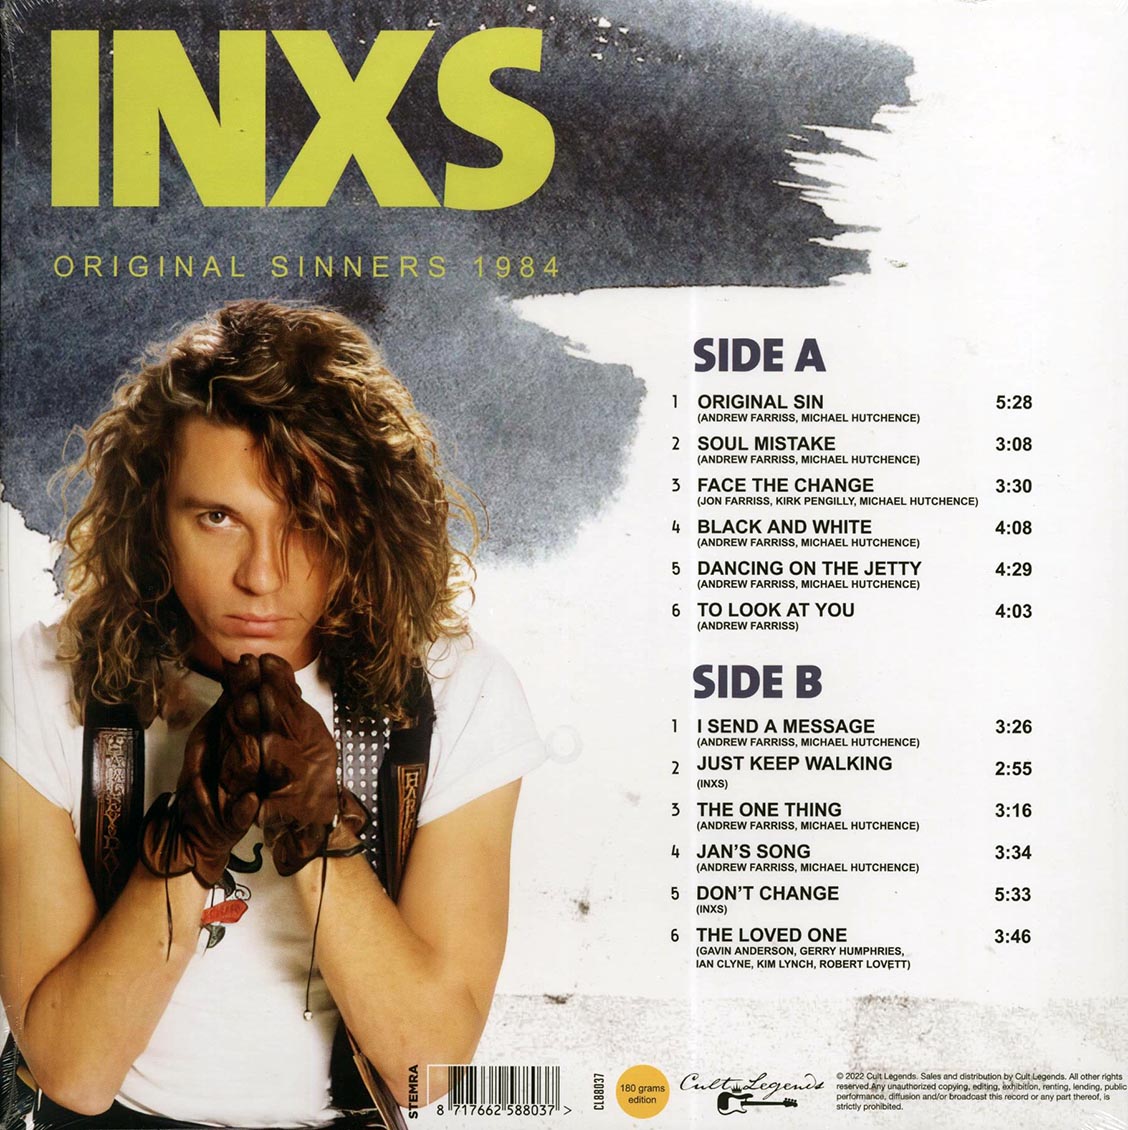 INXS - Original Sinners 1984: Live At Agora, Cleveland - Vinyl LP, LP